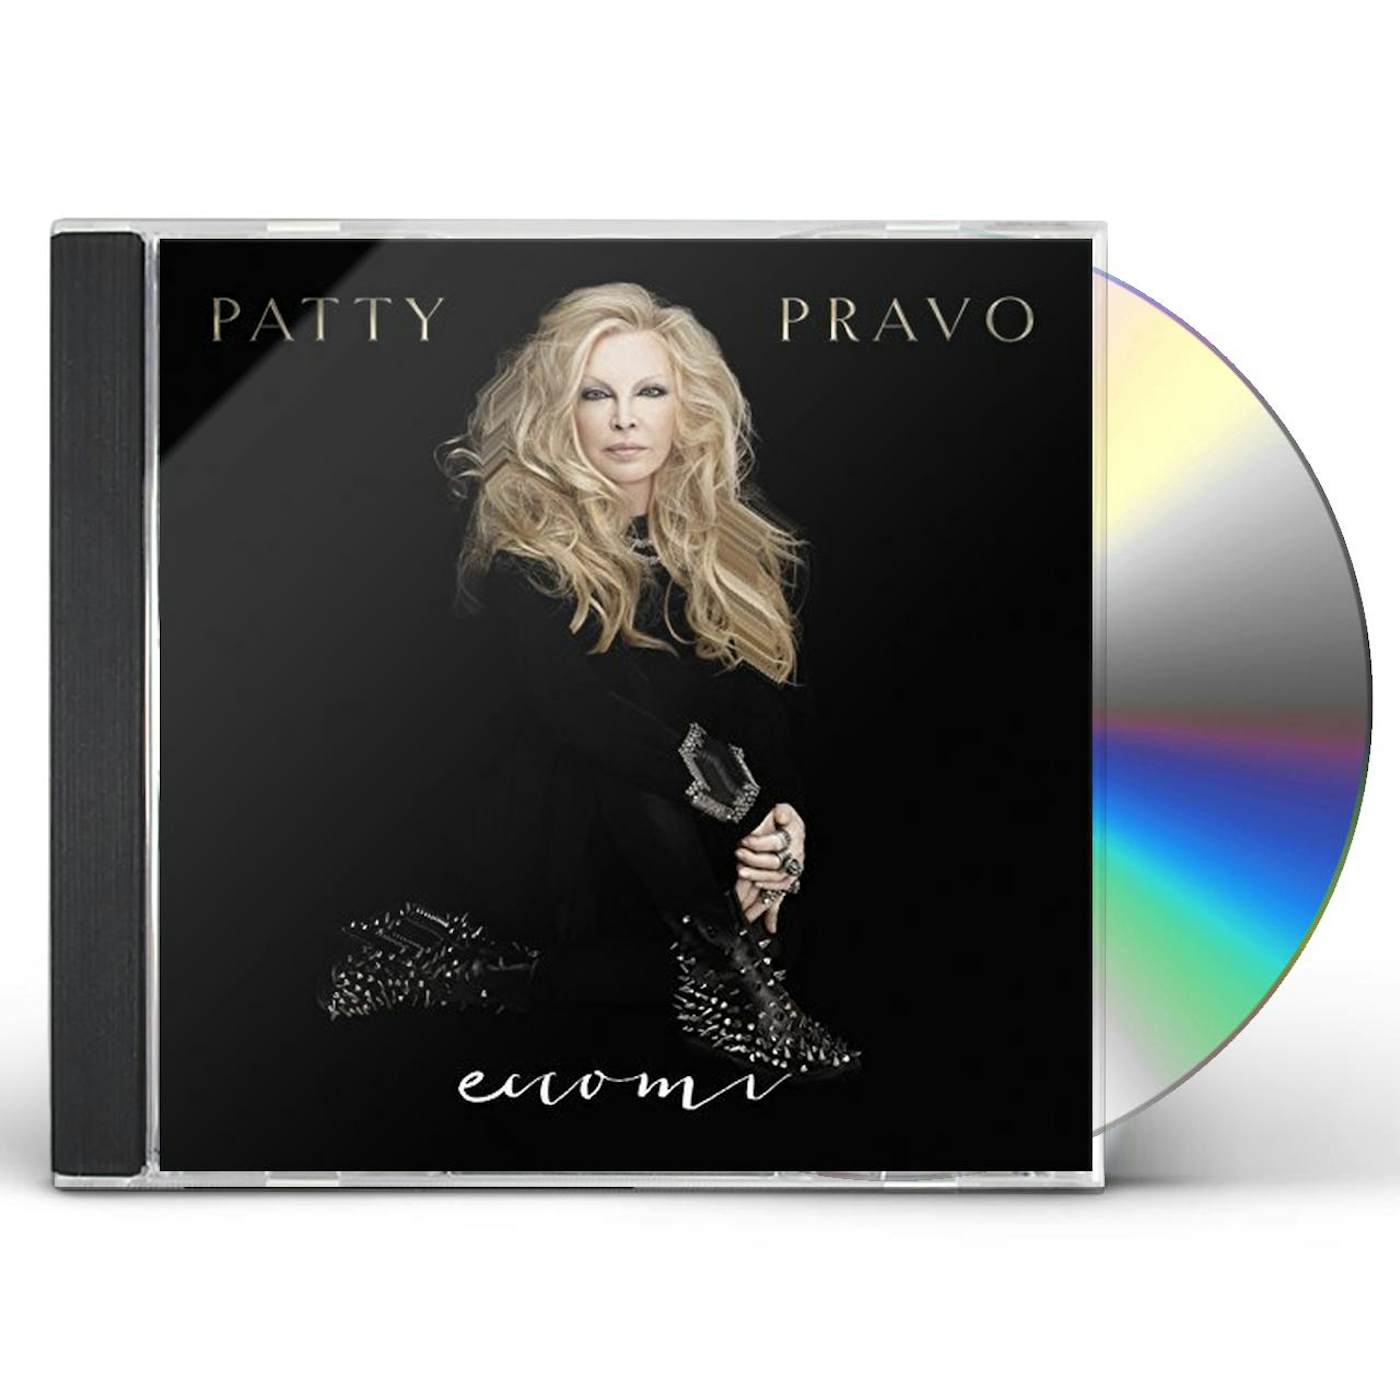 Patty Pravo ECCOMI CD